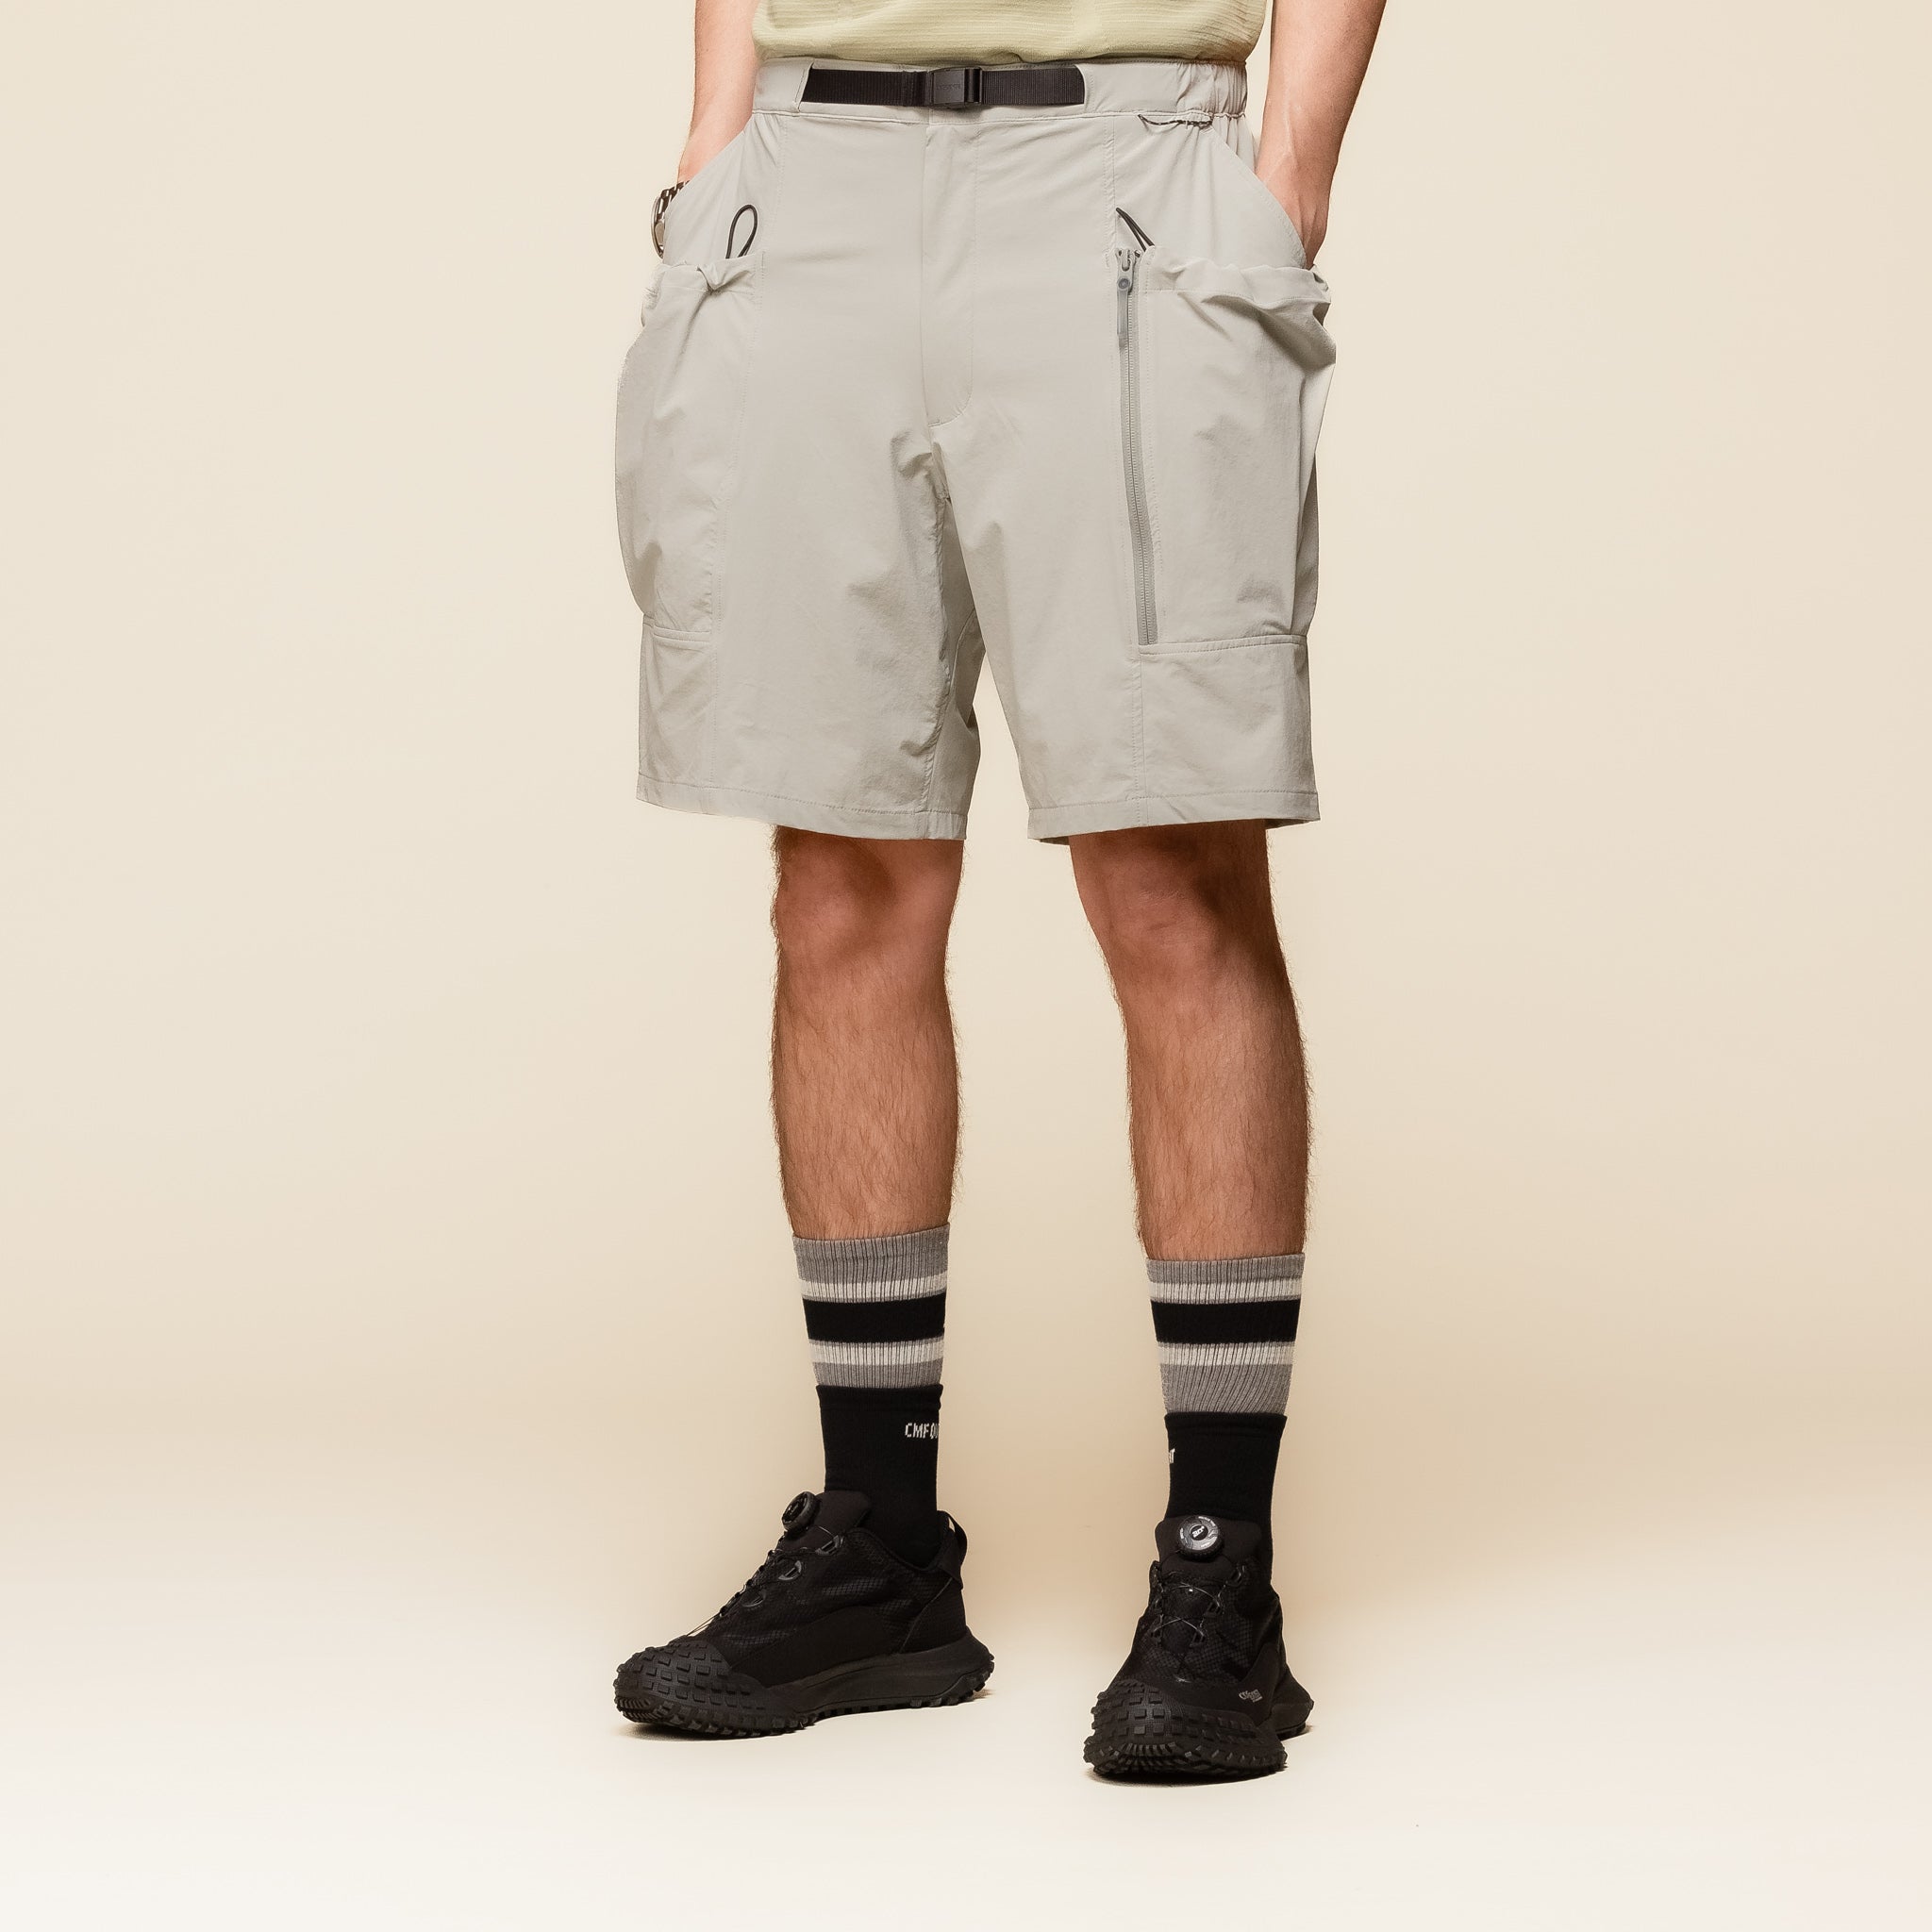 DOMXGD86U Descente 81 - Cordura Nylon Half Pants (Shorts) - Sand Beige